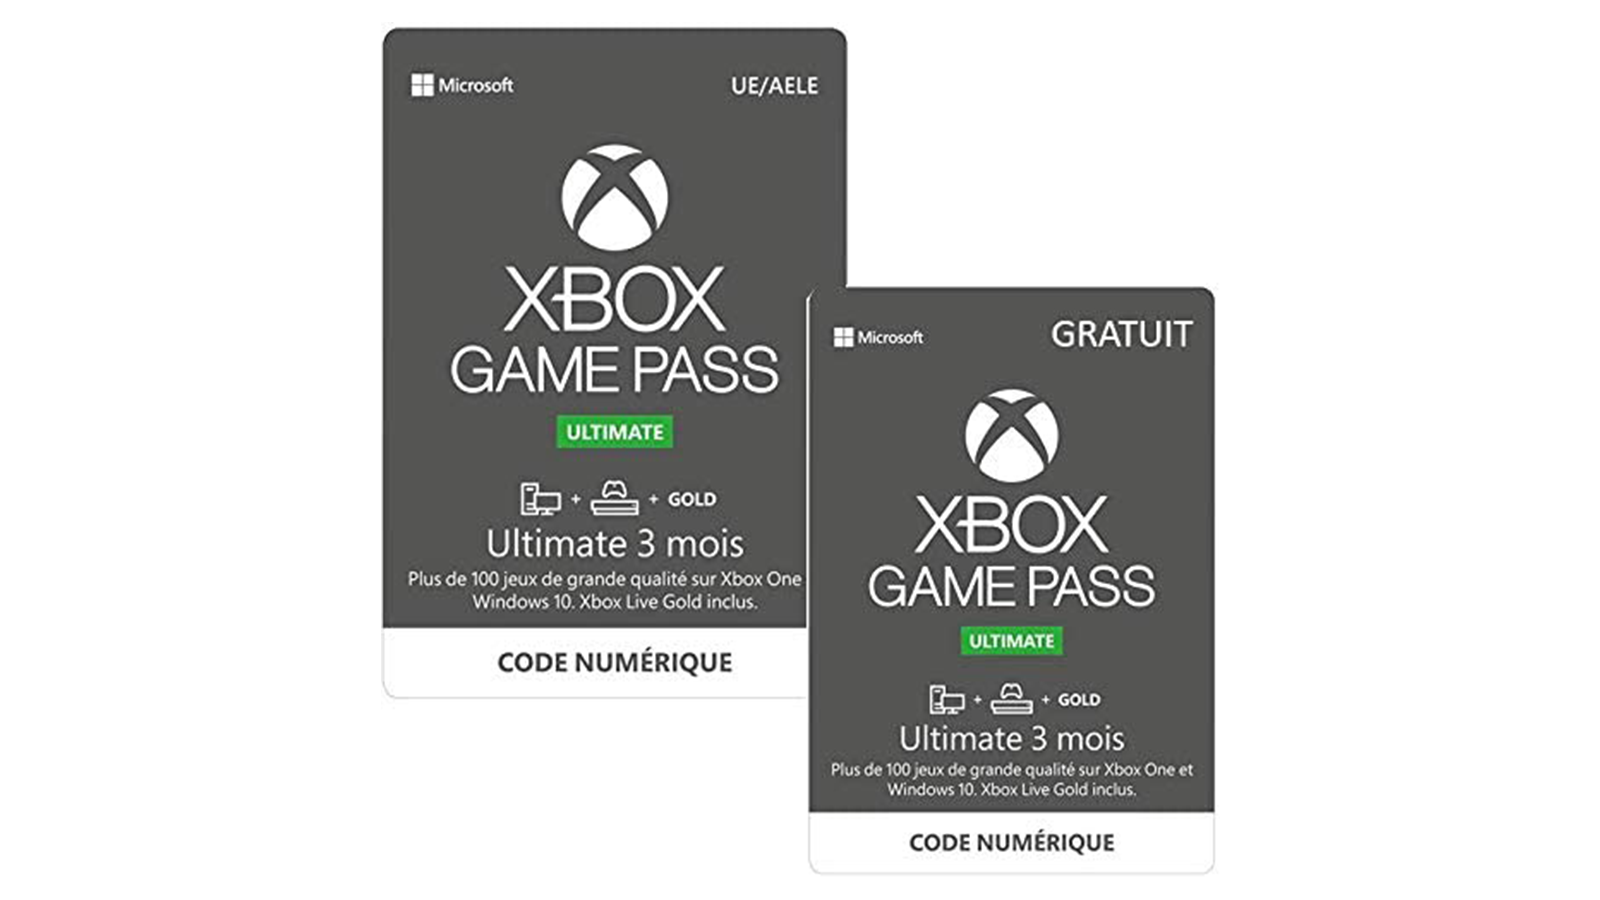 xbox ultimate game pass amazon